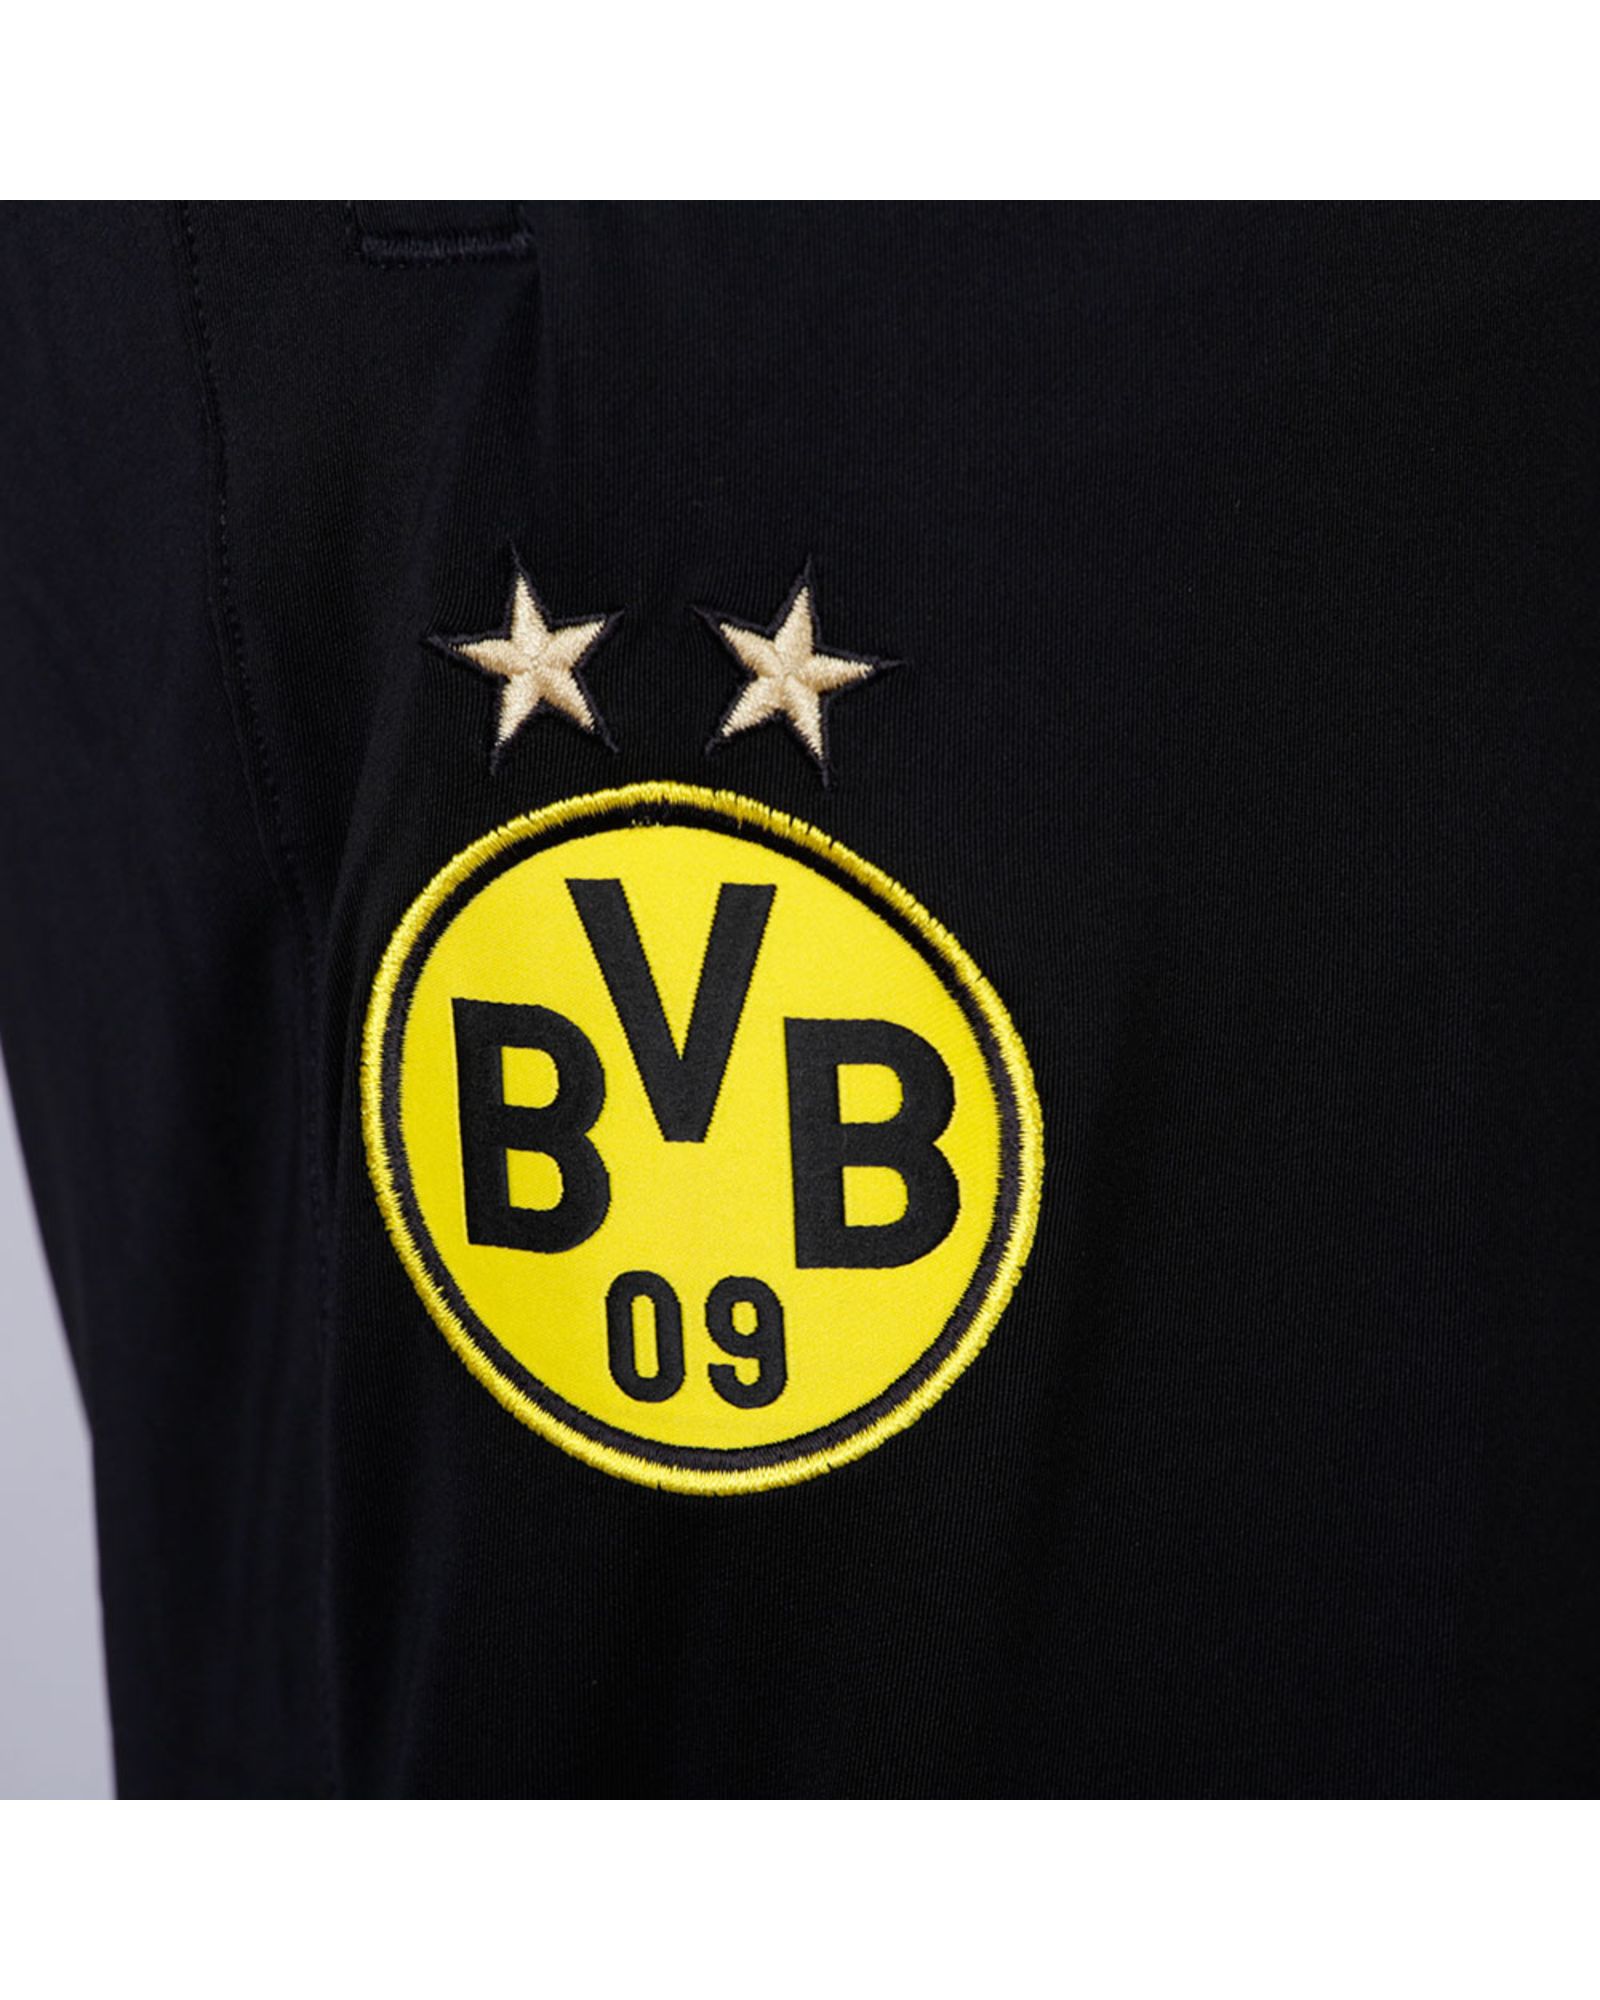 Pantalón de Training Borussia Dortmund 2017/2018 Negro - Fútbol Factory